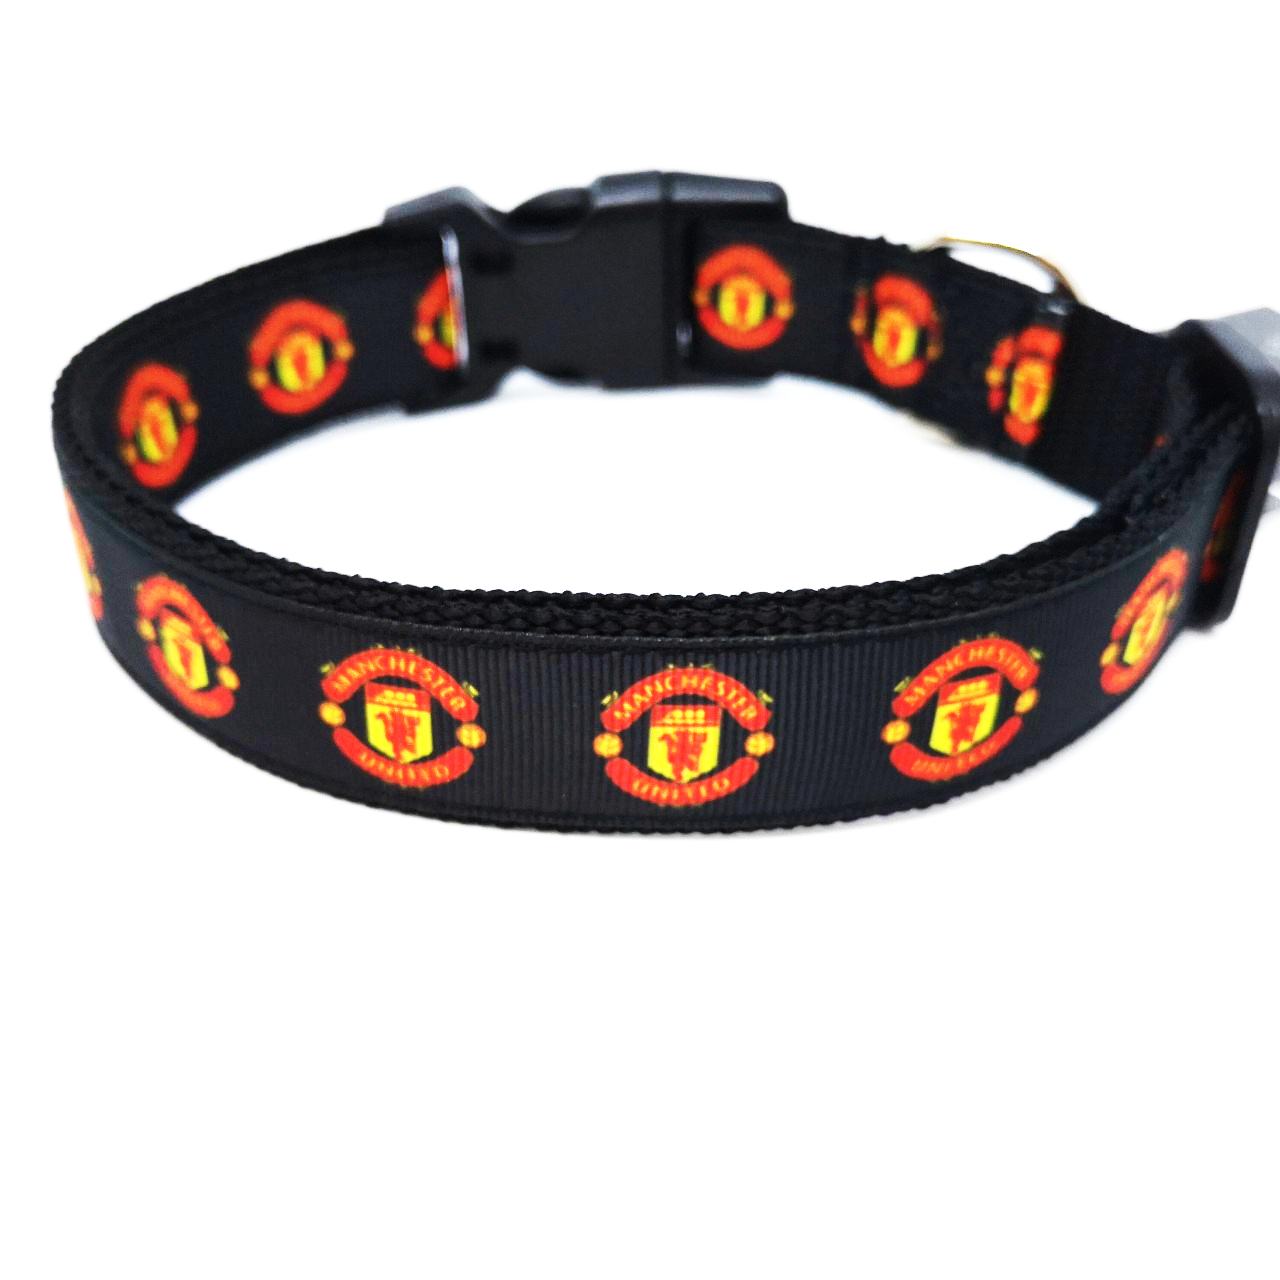 Manchester United Dog Collar thatdogintuxedo